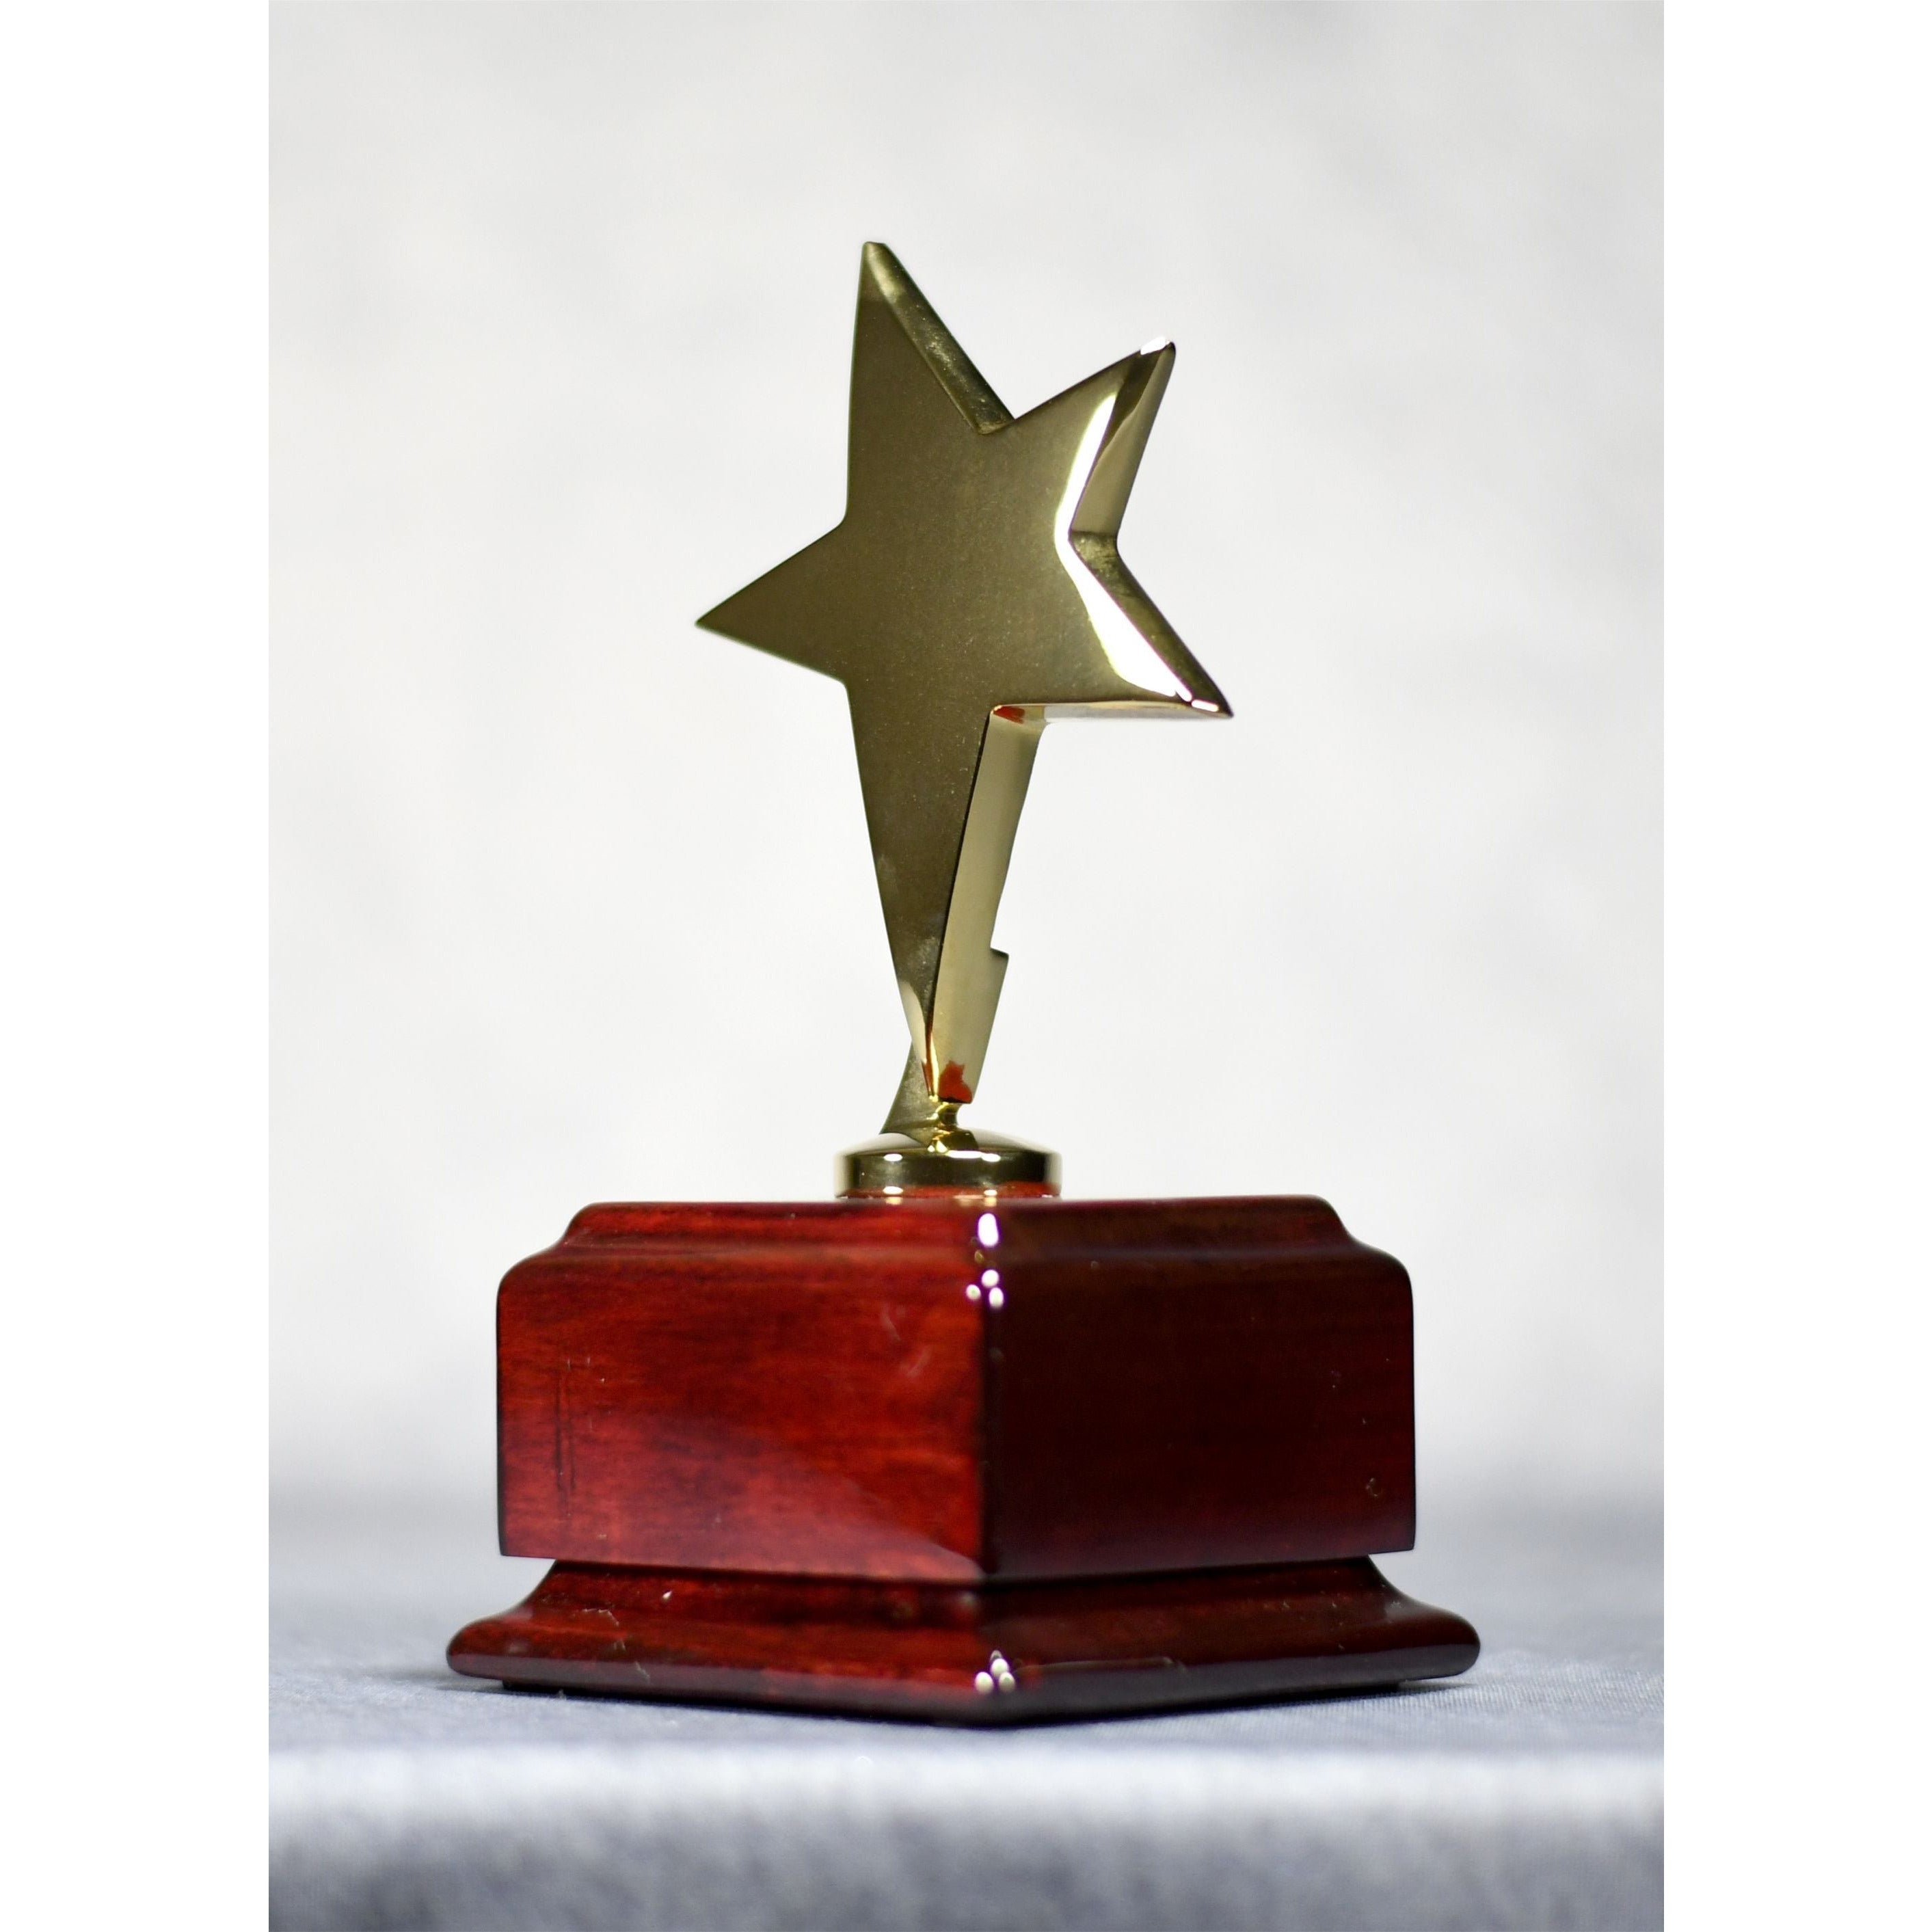 Star Performer Gold Star On Rosewood Base | Alliance Awards LLC.